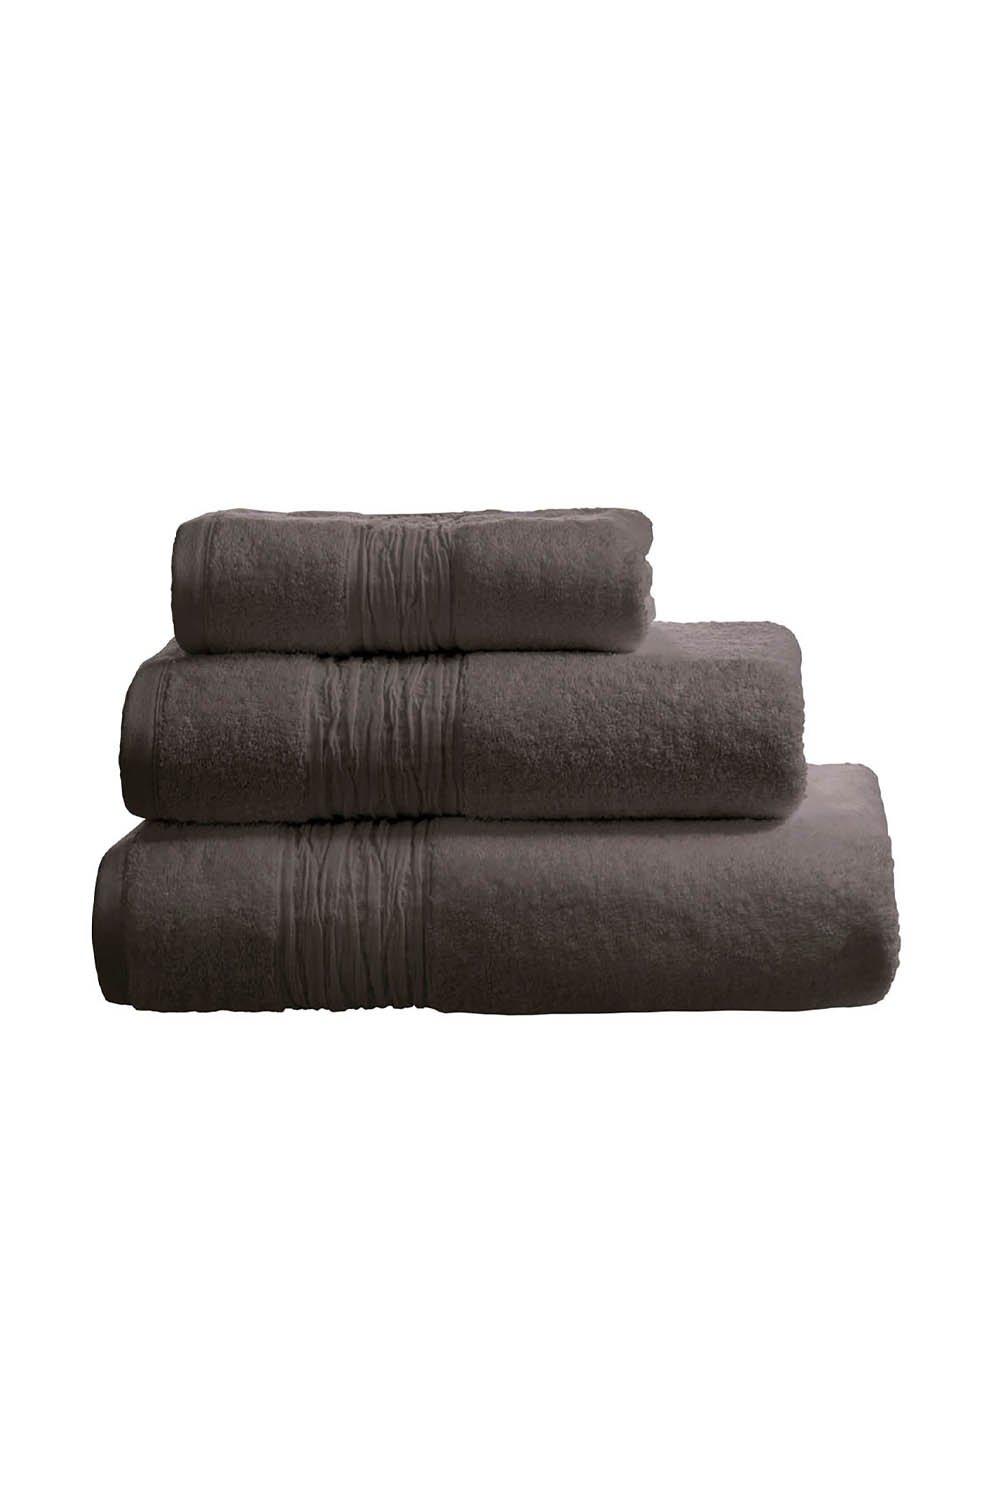 Turkish Cotton With Linen Blend Insert Border 600gsm 4 Piece Towel Bale